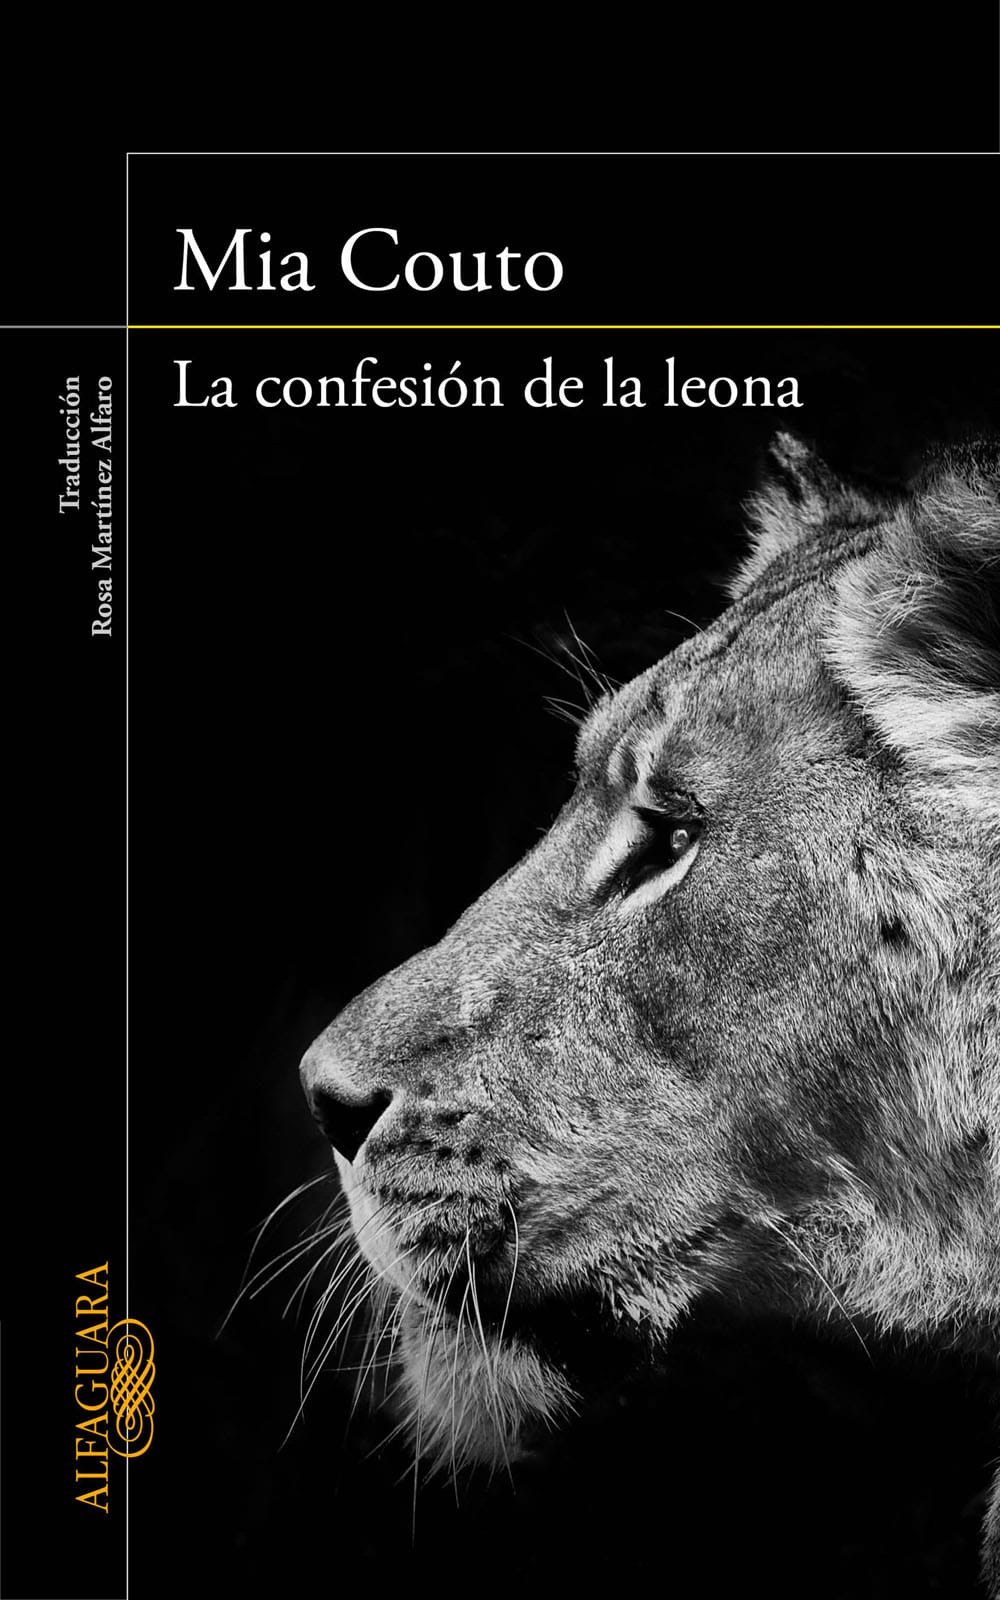 La confesión de la leona, Mia Couto